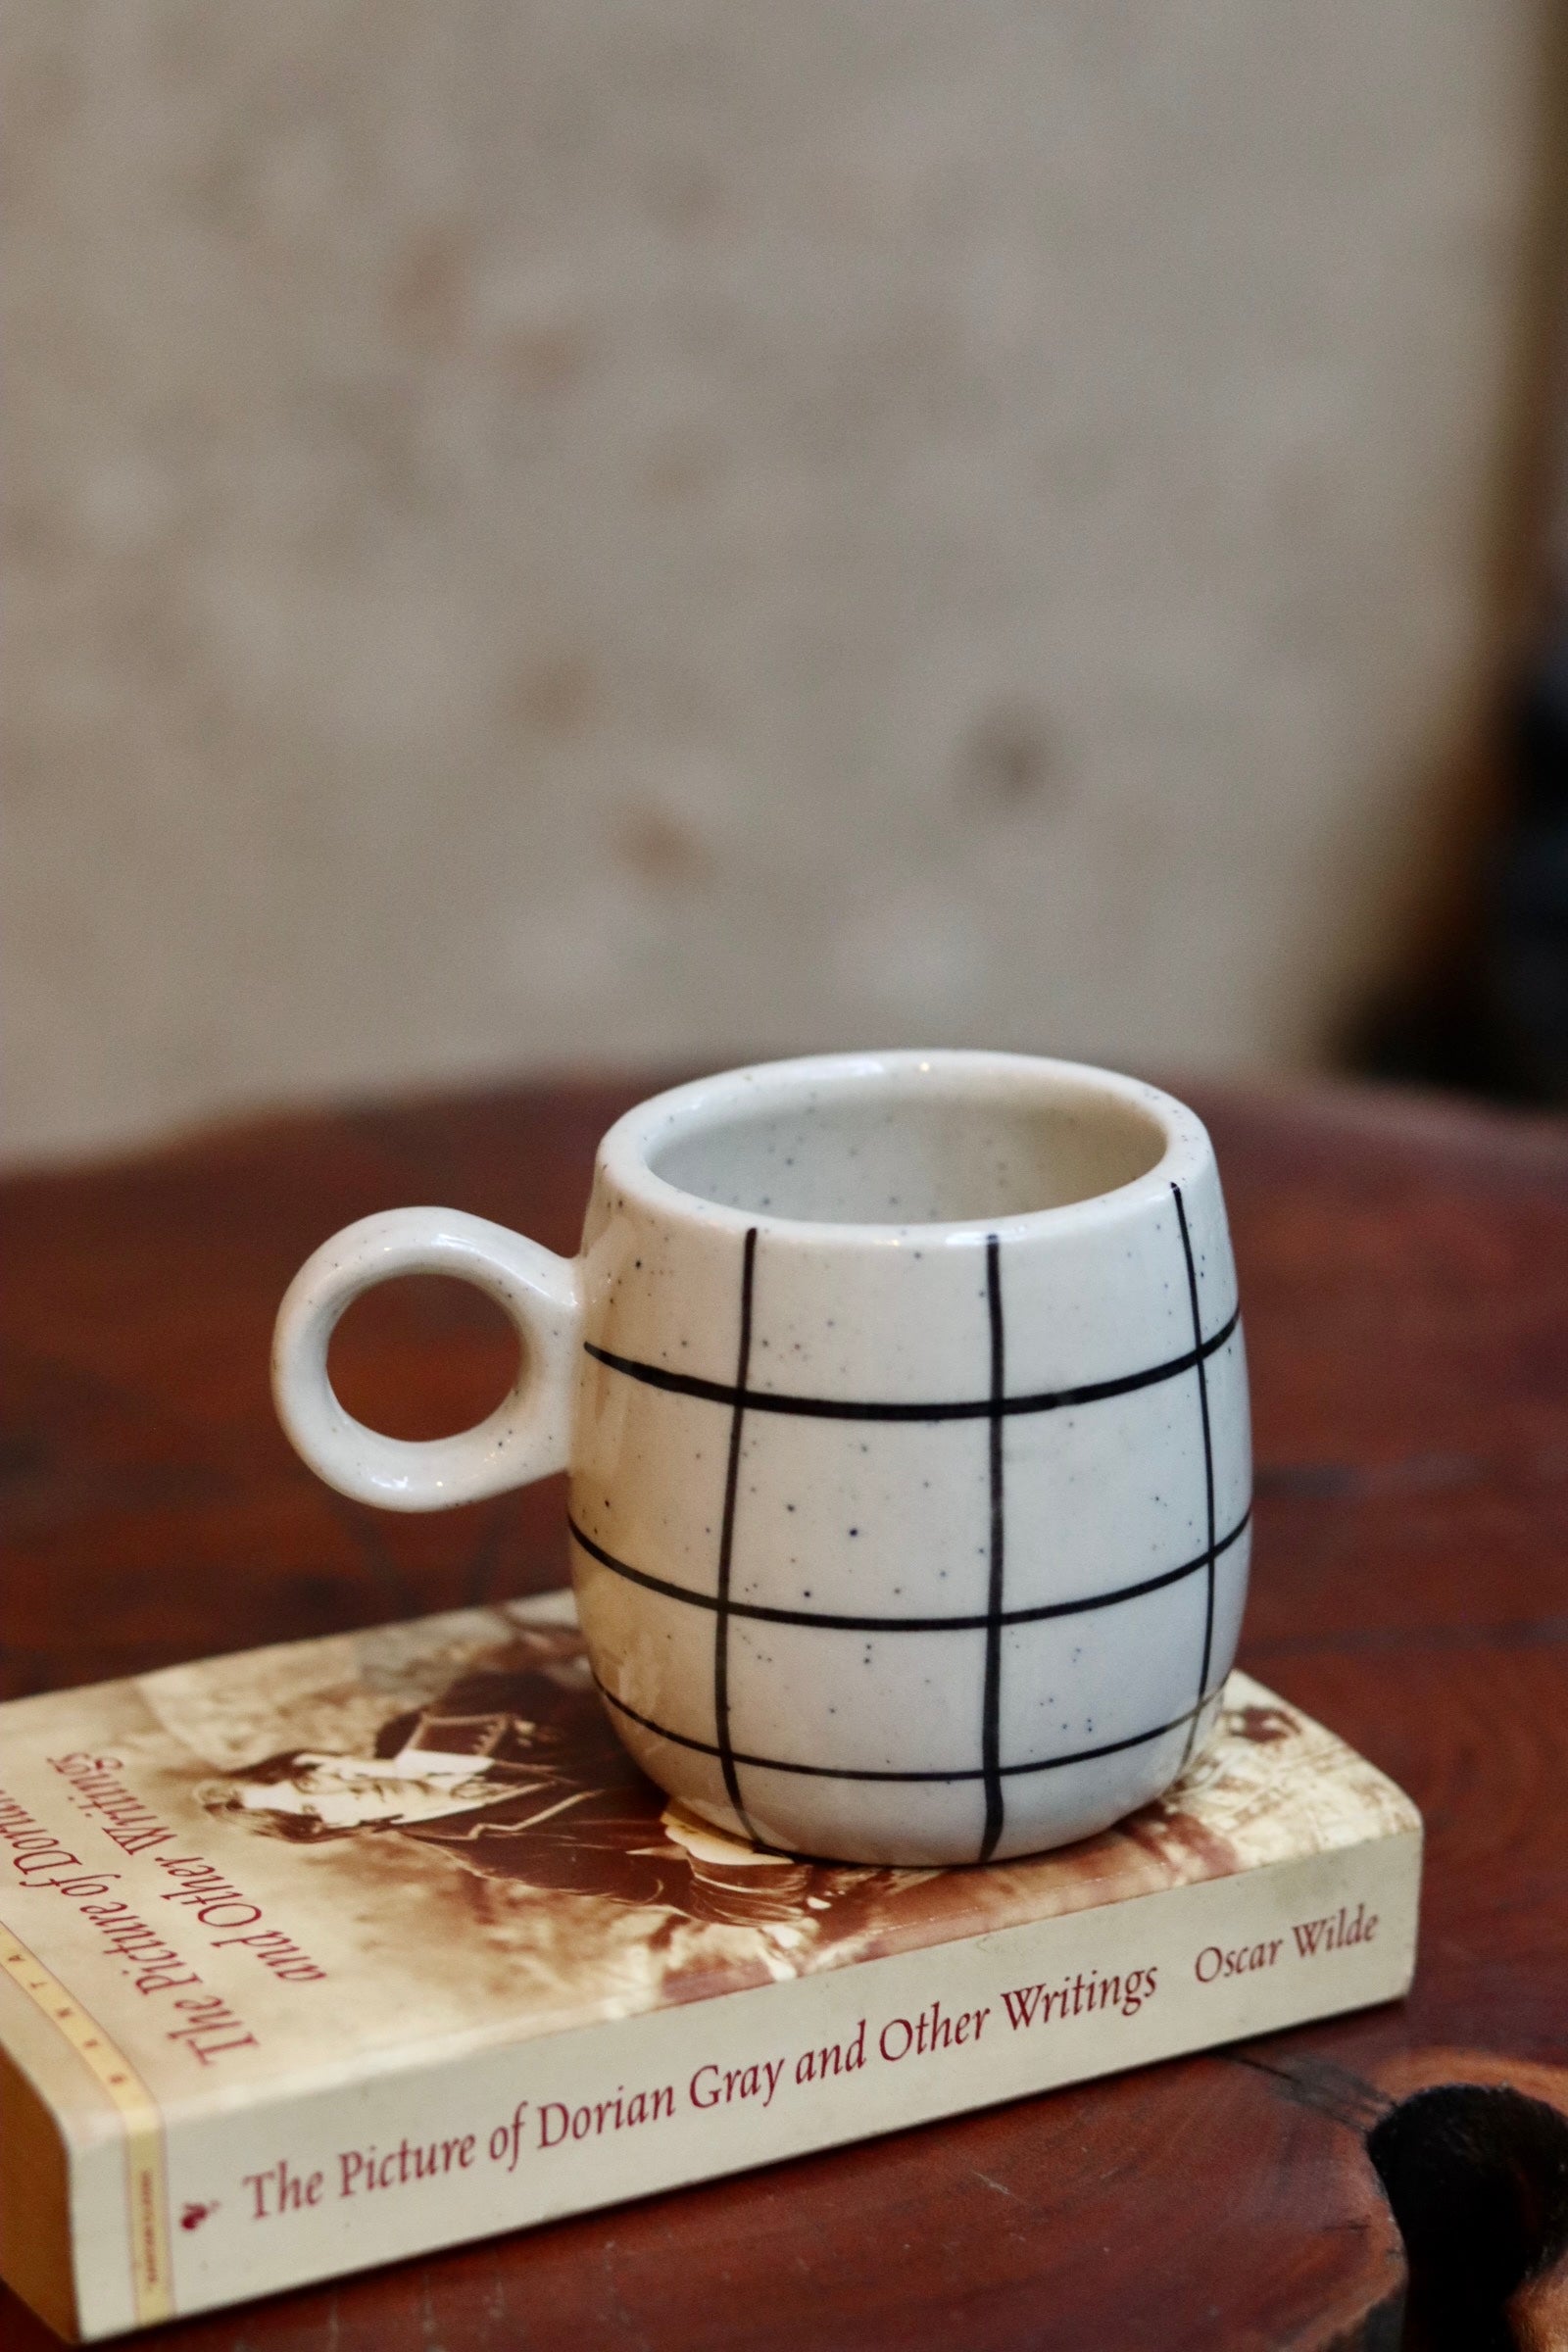 Black checkered coffee mug on a book